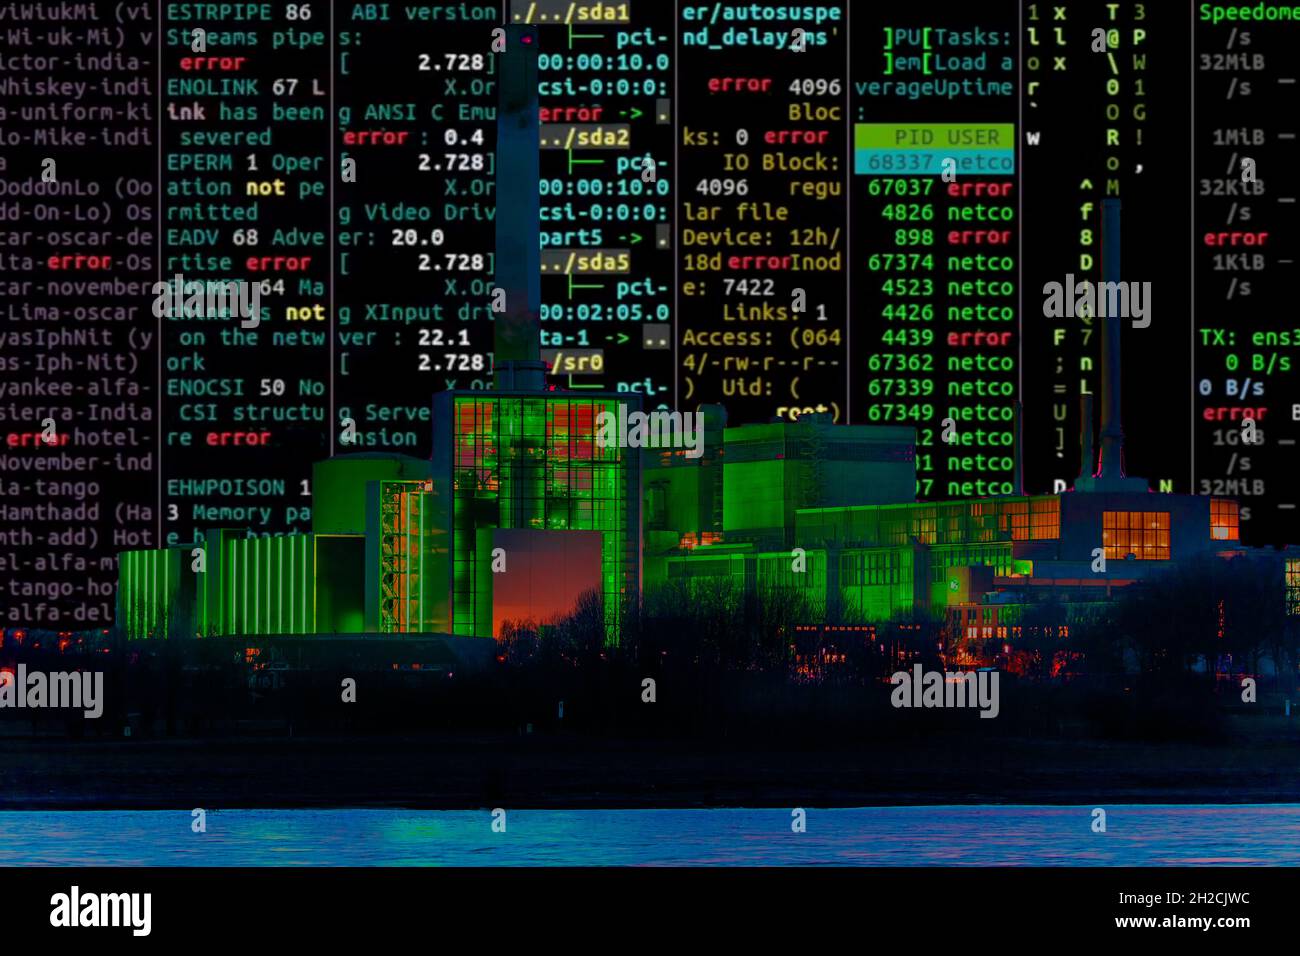 Immagine simbolica cyber attacco, criminalità informatica, cybercrimine, computer hacker attacco infrastruttura INFORMATICA di una città, centrale elettrica, Düsseldorf Foto Stock